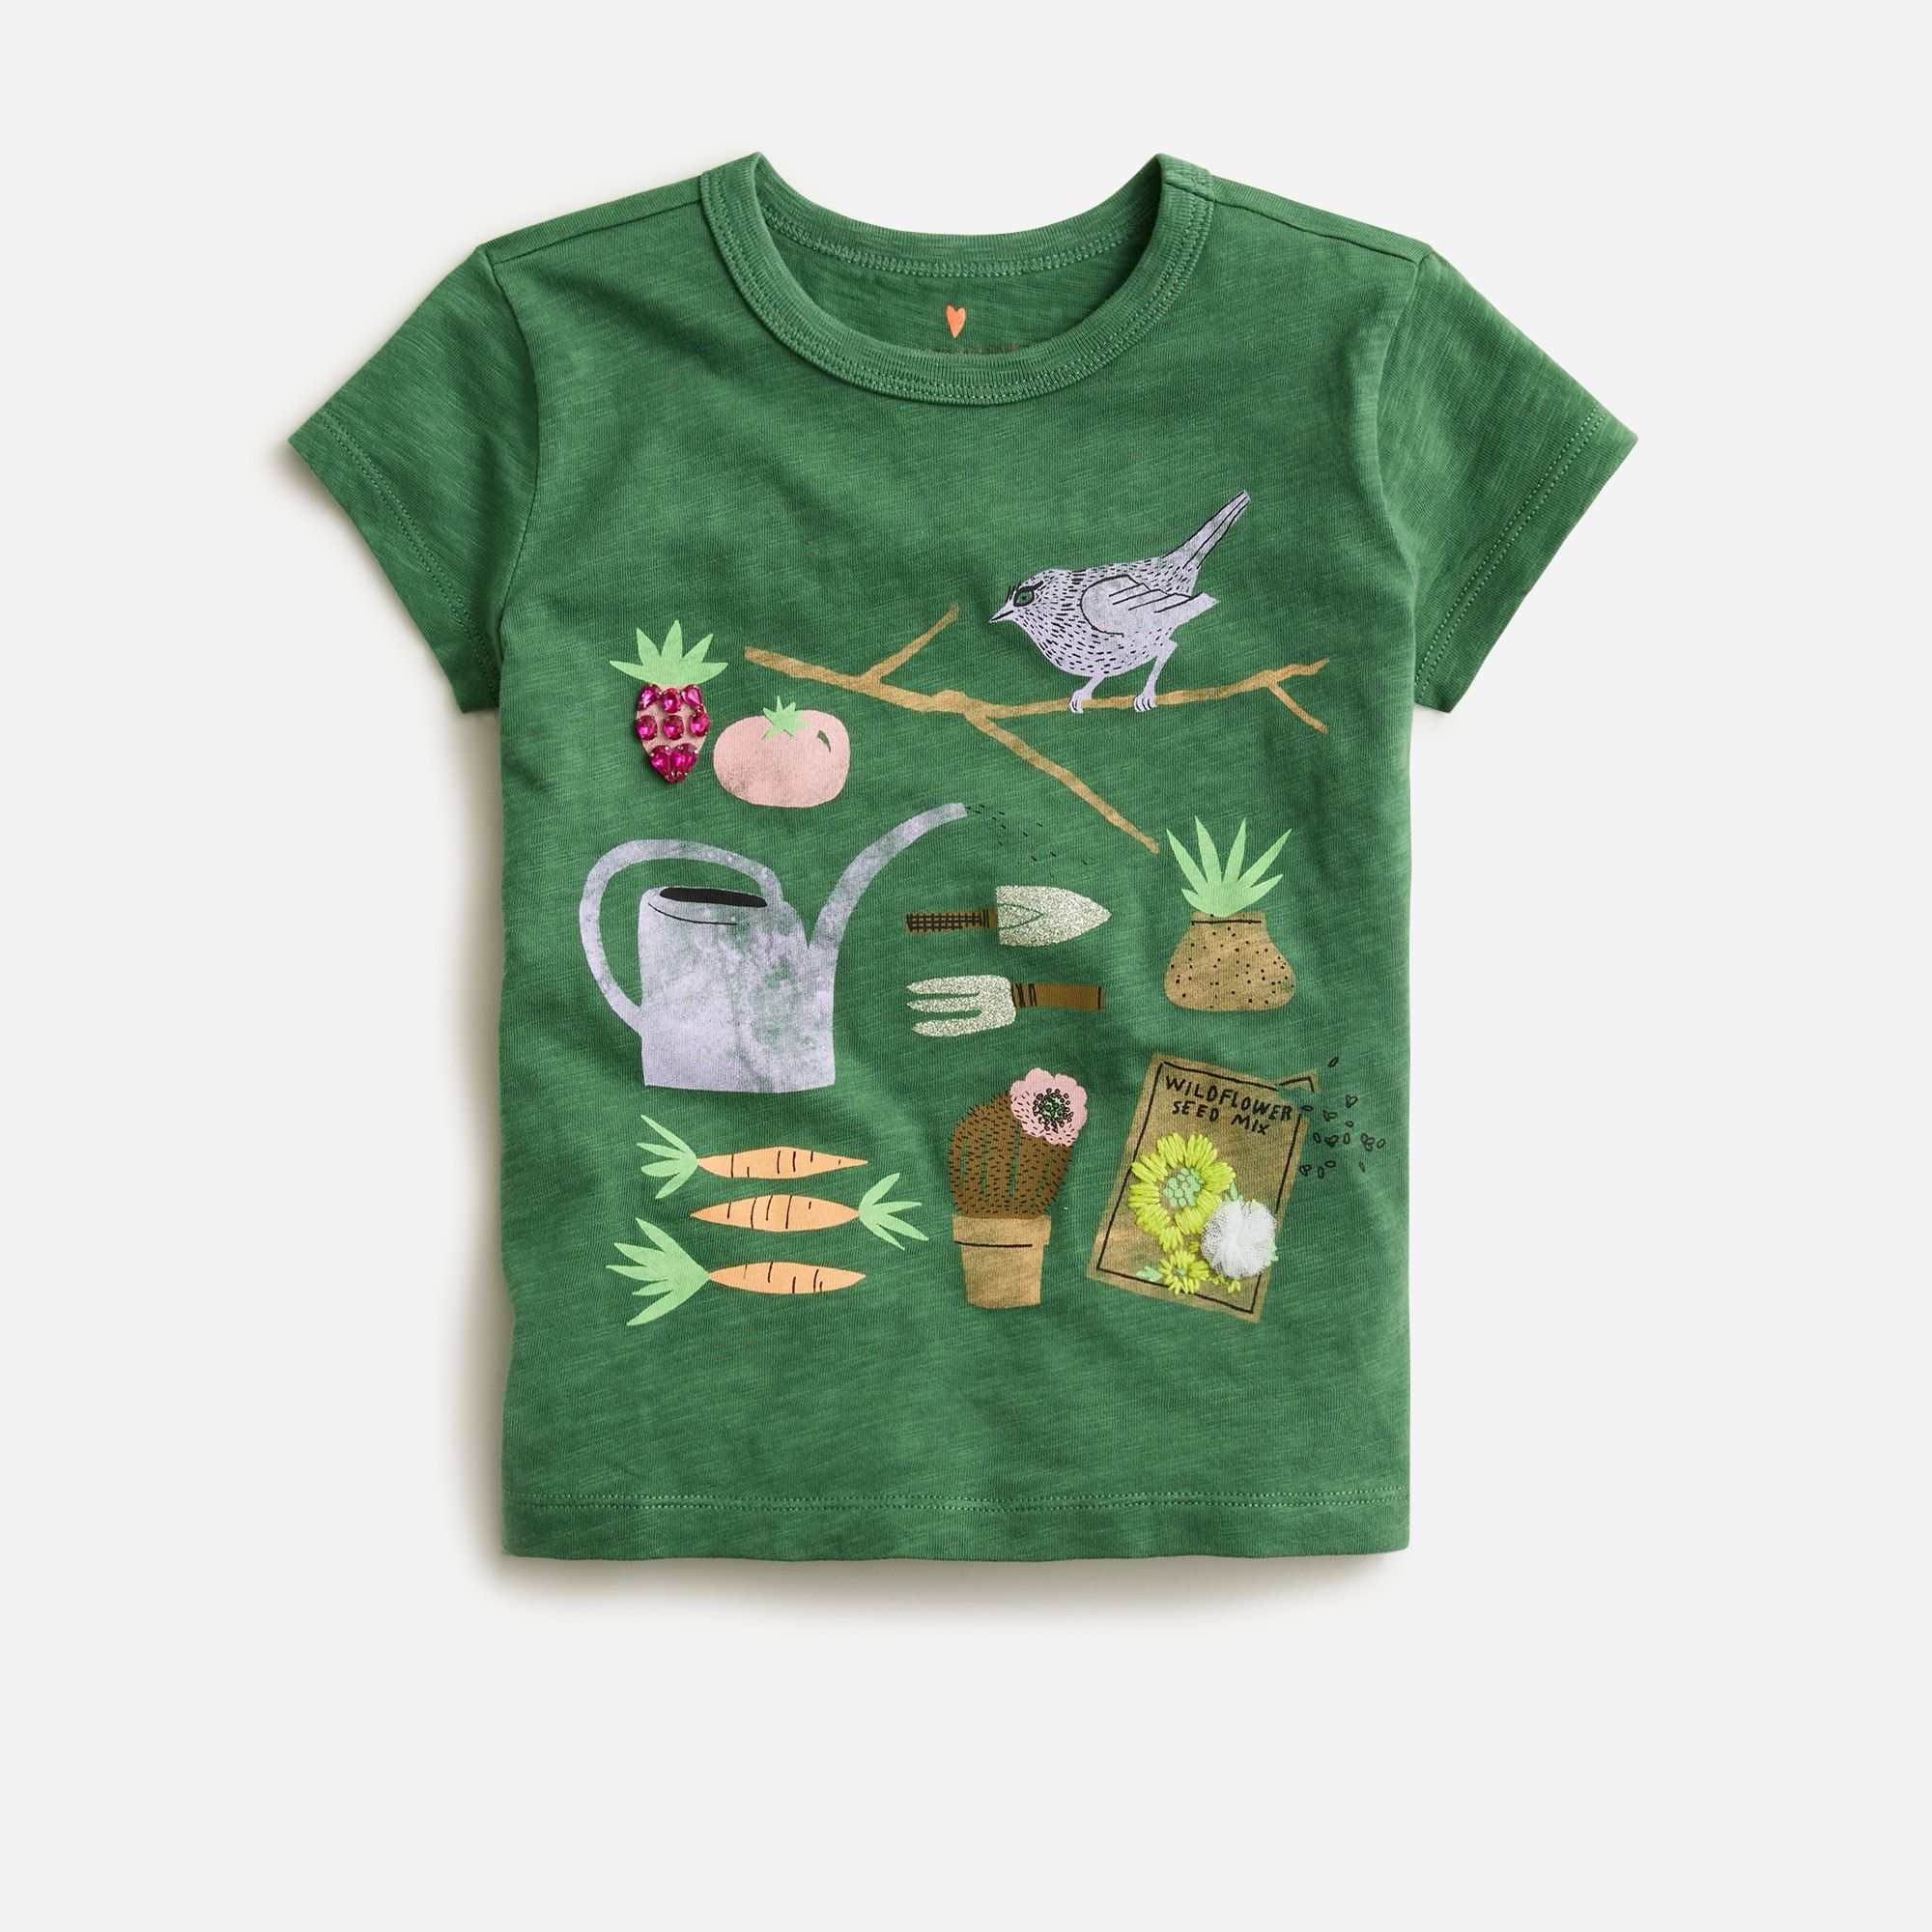  Girls' embellished garden graphic T-shirt